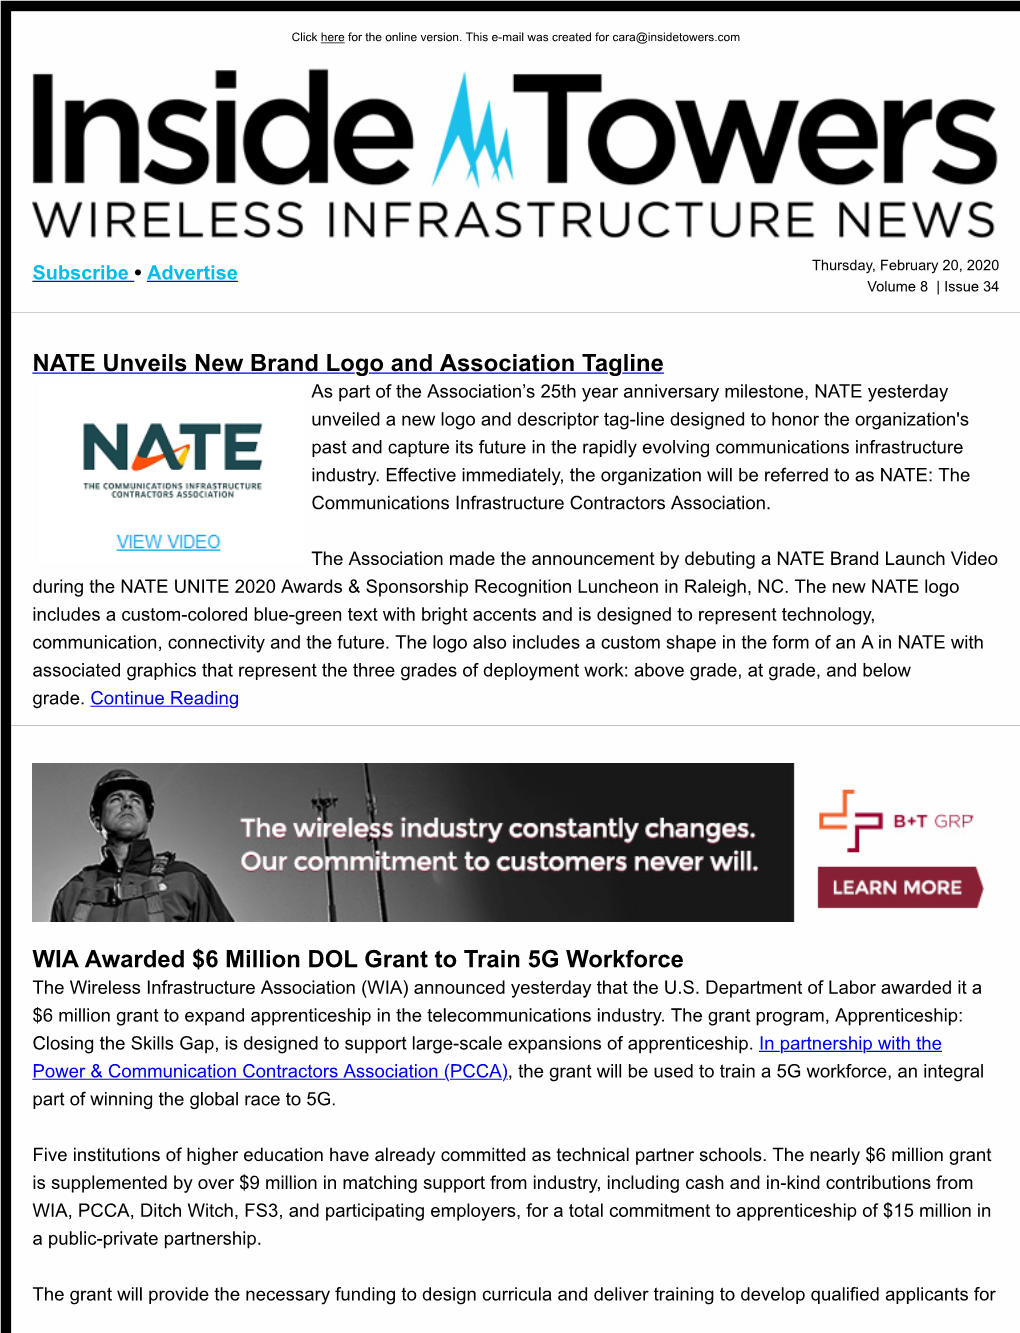 NATE Unveils New Brand Logo and Association Tagline WIA Awarded